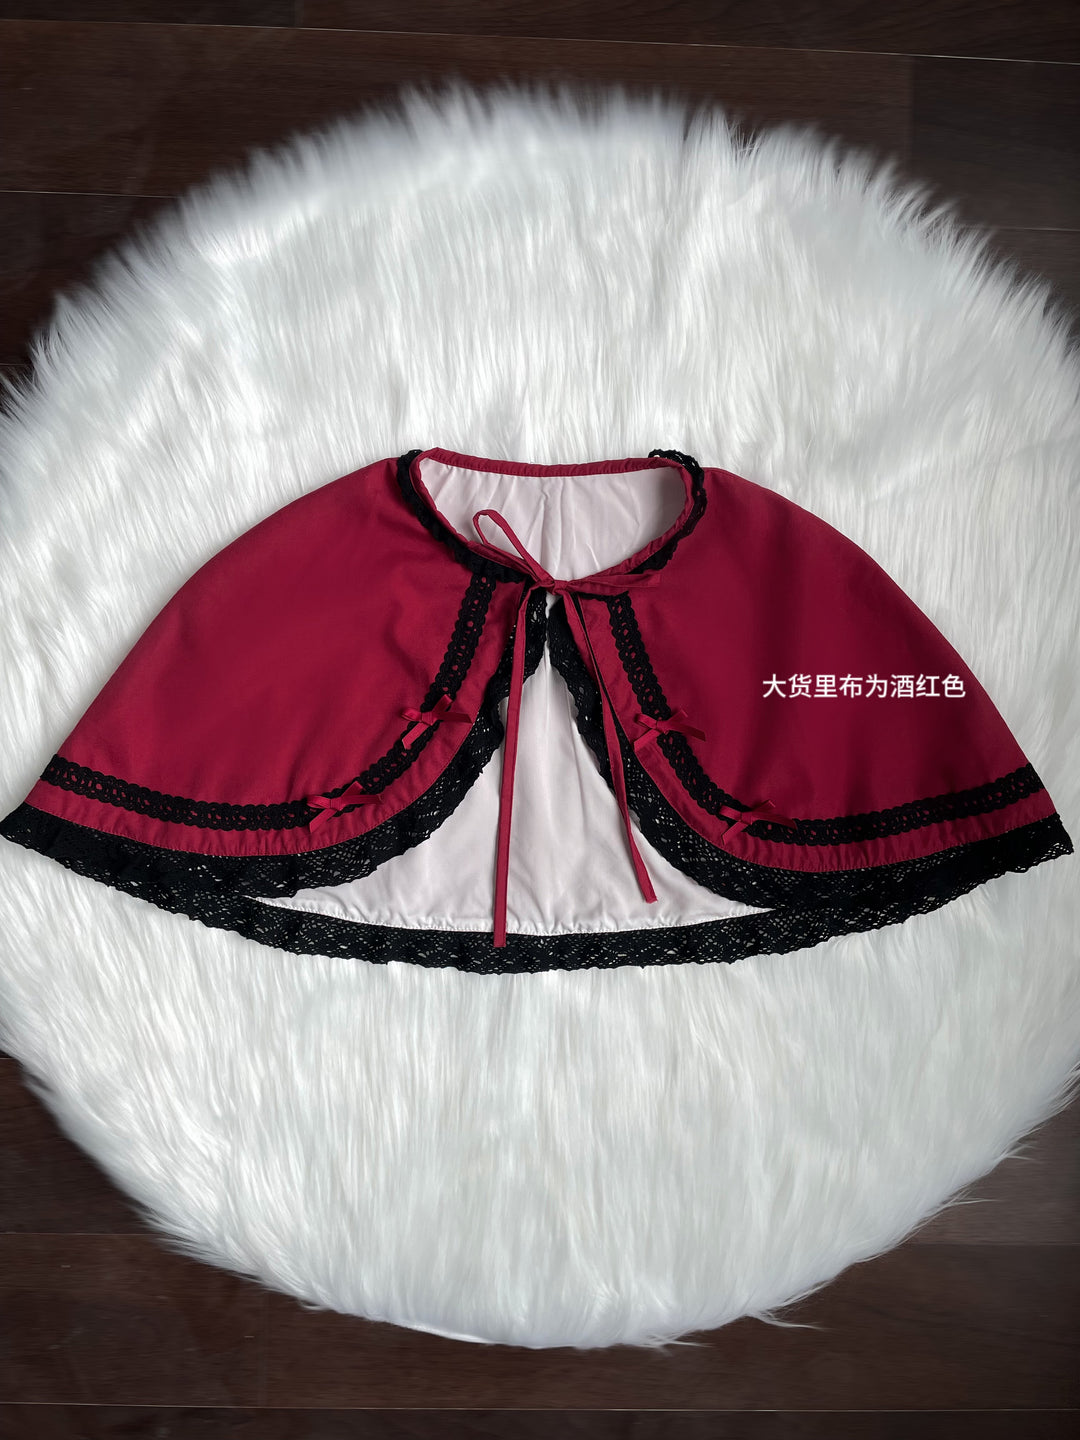 Mengfuzi~Doll Heart~Gorgeous Lolita Dress Vintage OP Cape Set S Red and black cape 